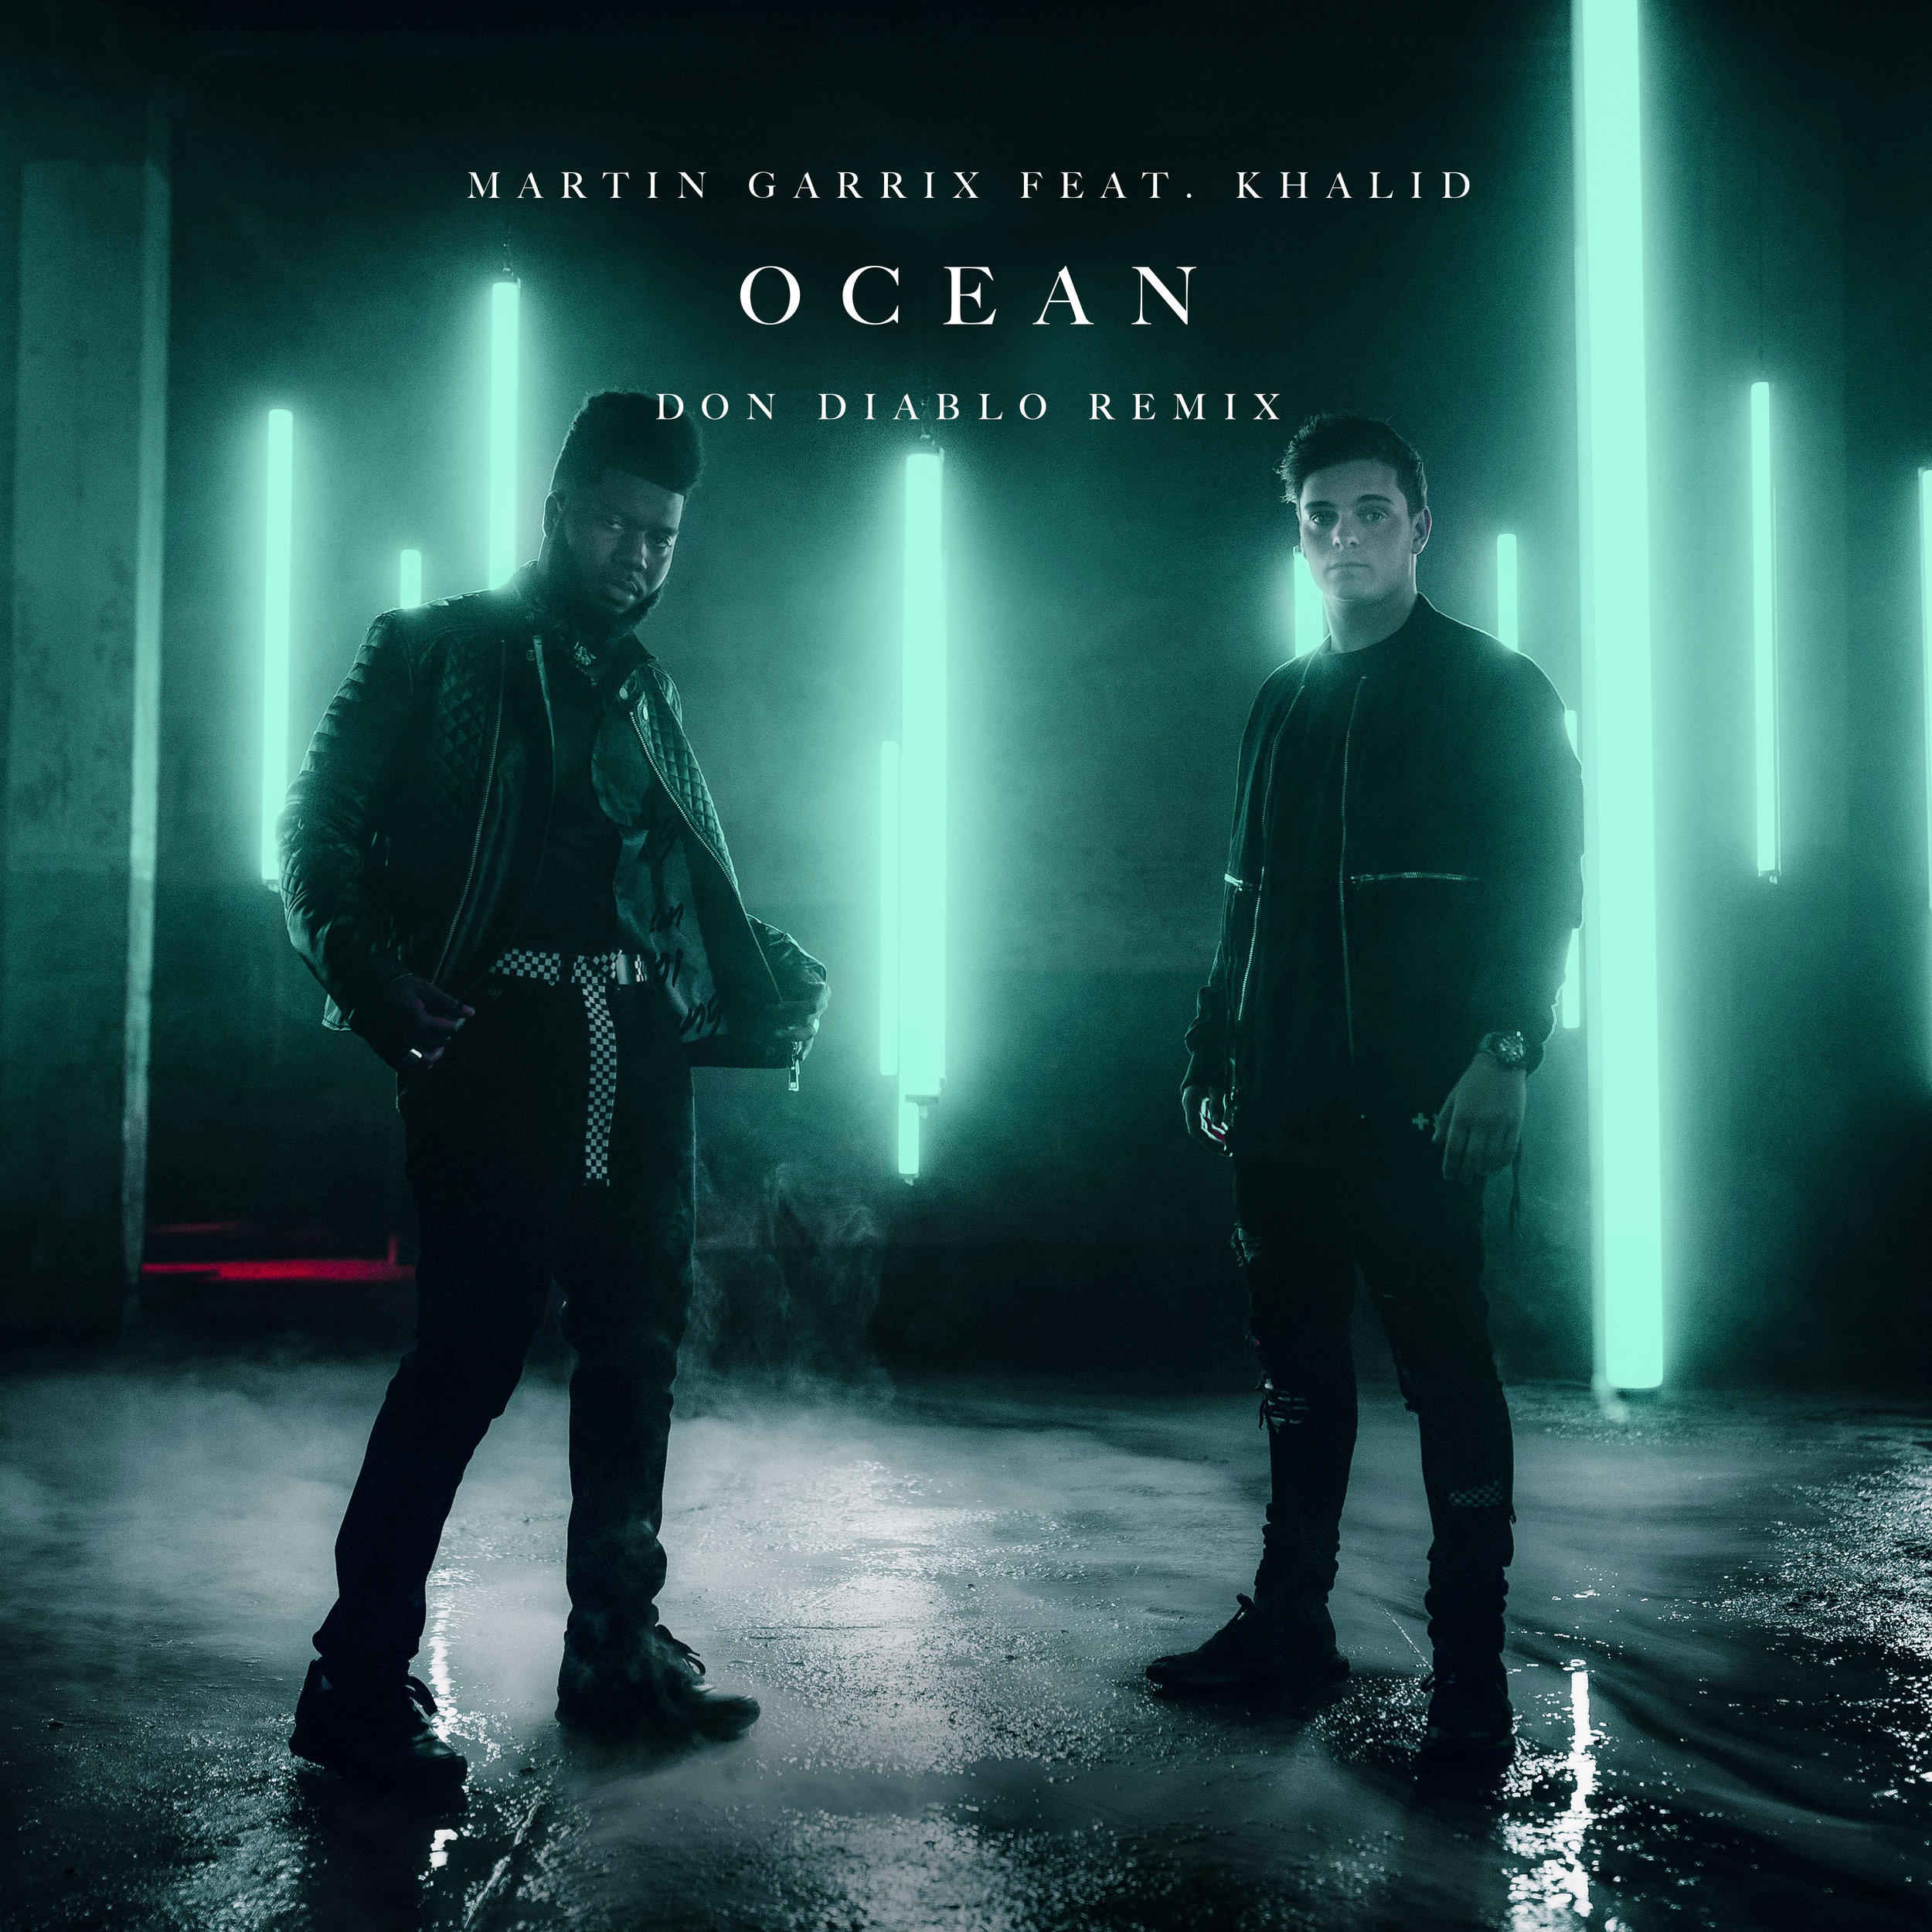 Ocean don diablo remix artwork*.jpg